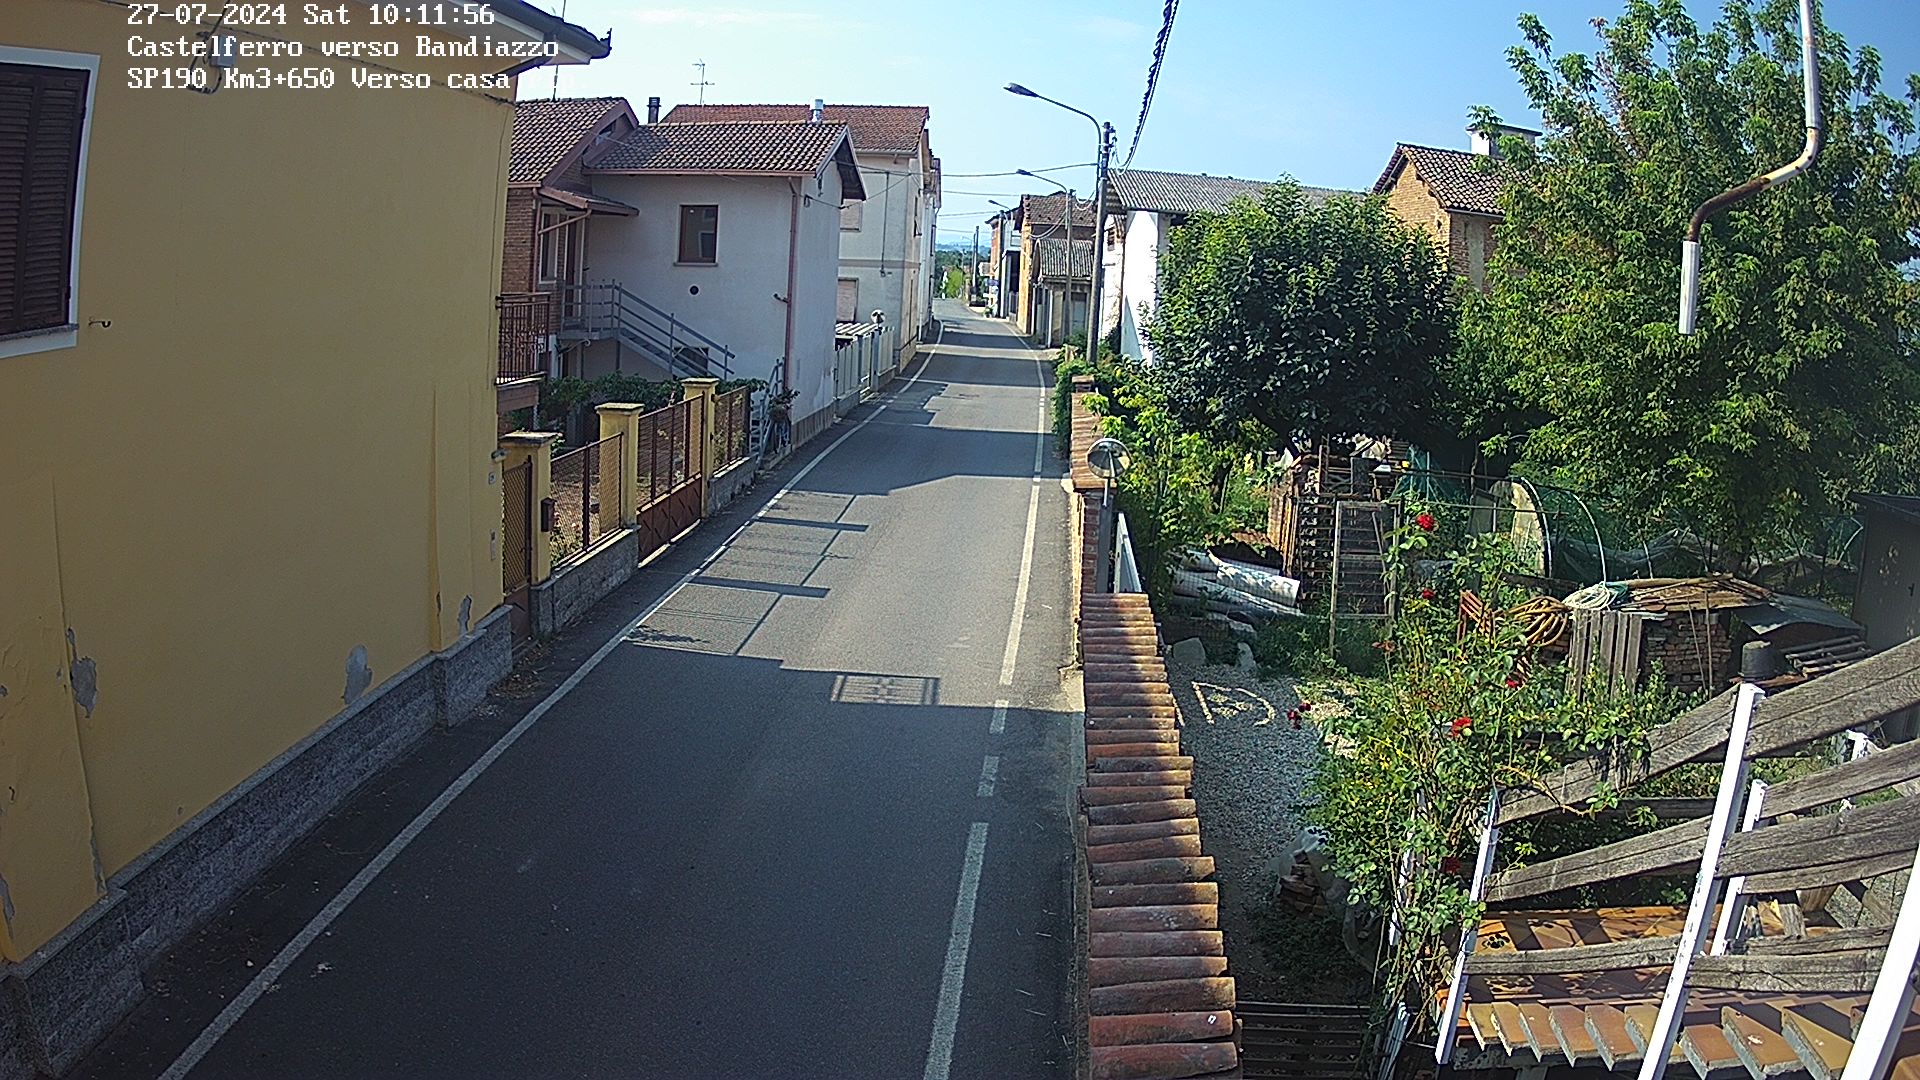 Immagine Webcam Castelferro